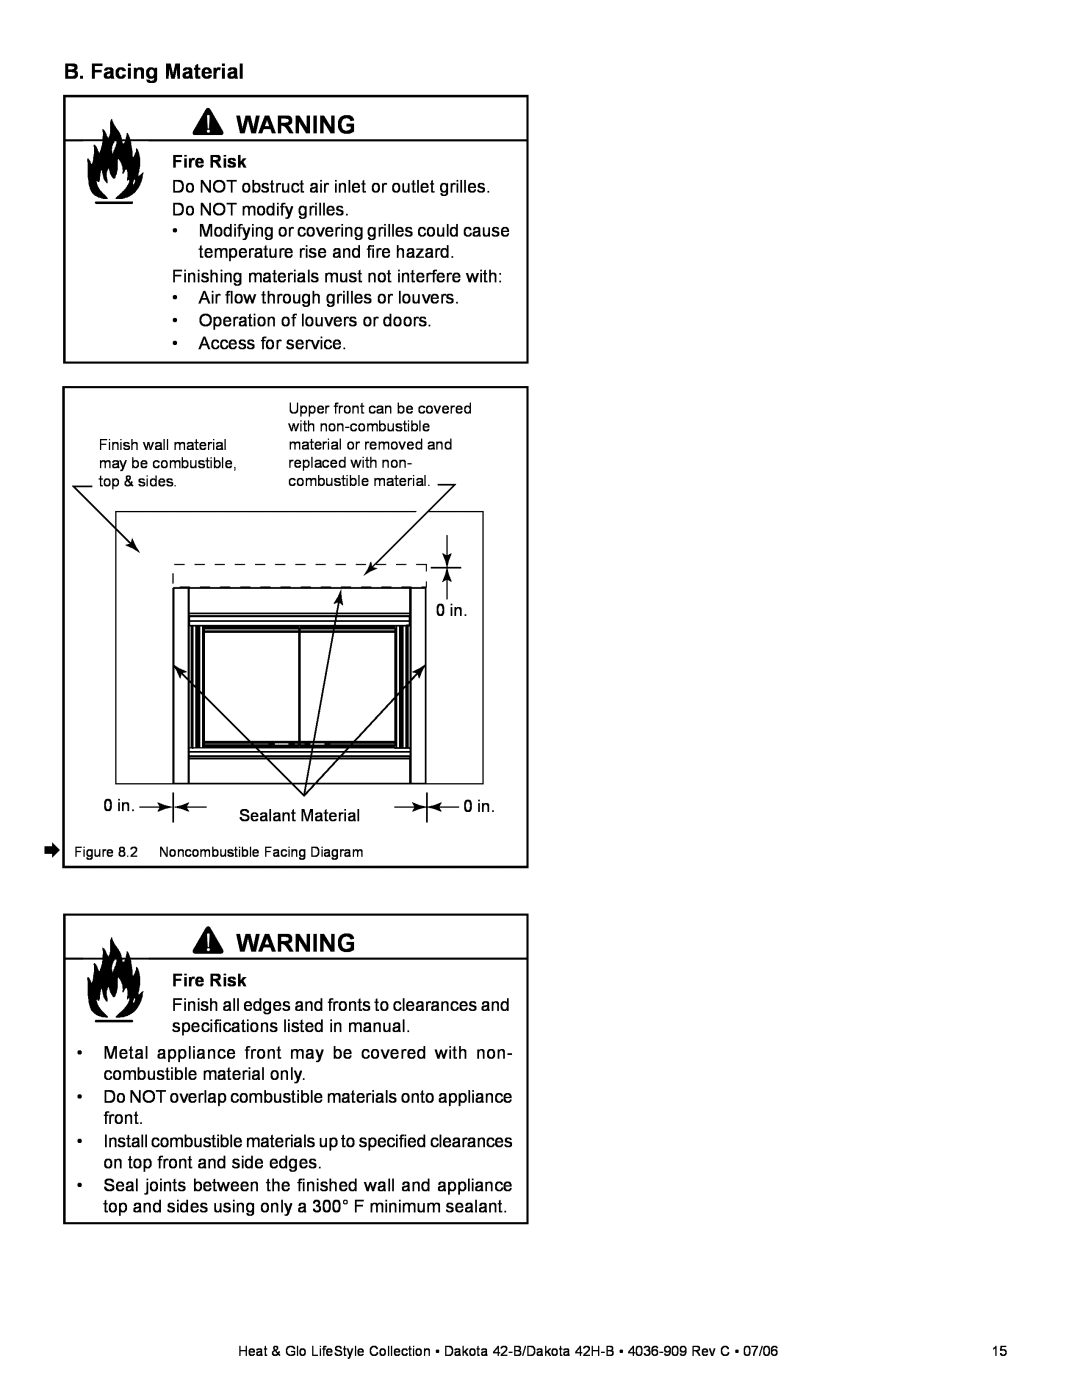 Heat & Glo LifeStyle Heat & Glo Gas Appliance, Dakota 42-B, Dakota 42H-B owner manual B. Facing Material, Fire Risk 